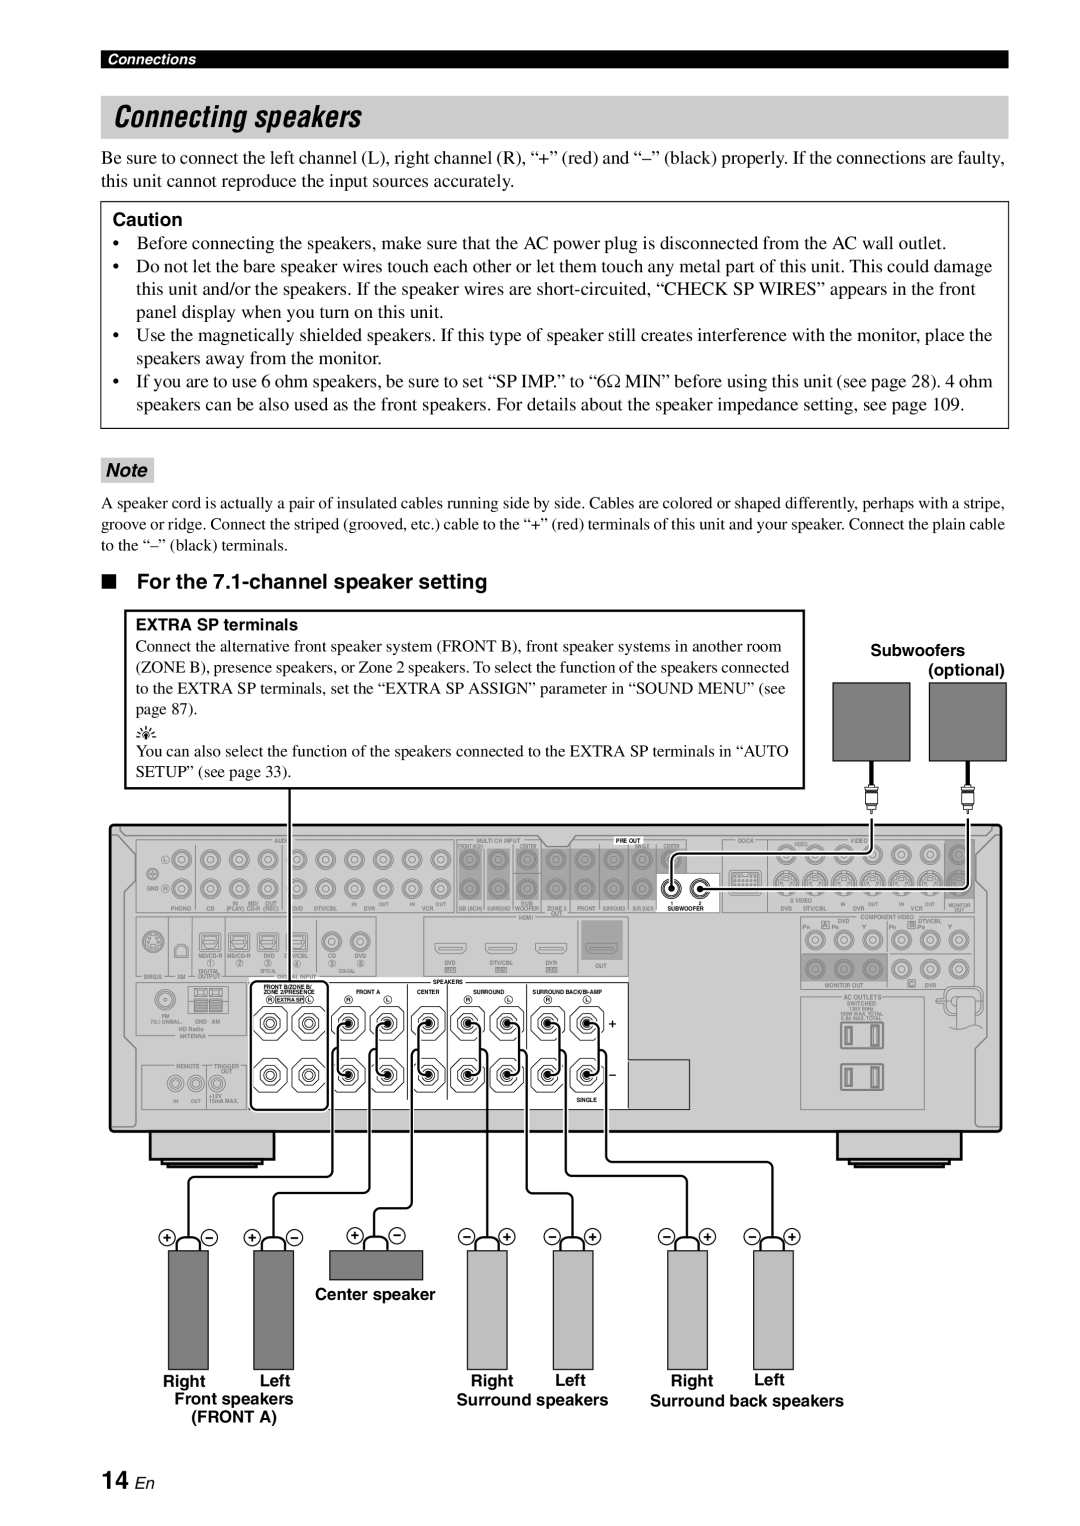 Yamaha RX-V863 owner manual Connecting speakers, 14 En, For the 7.1-channelspeaker setting 